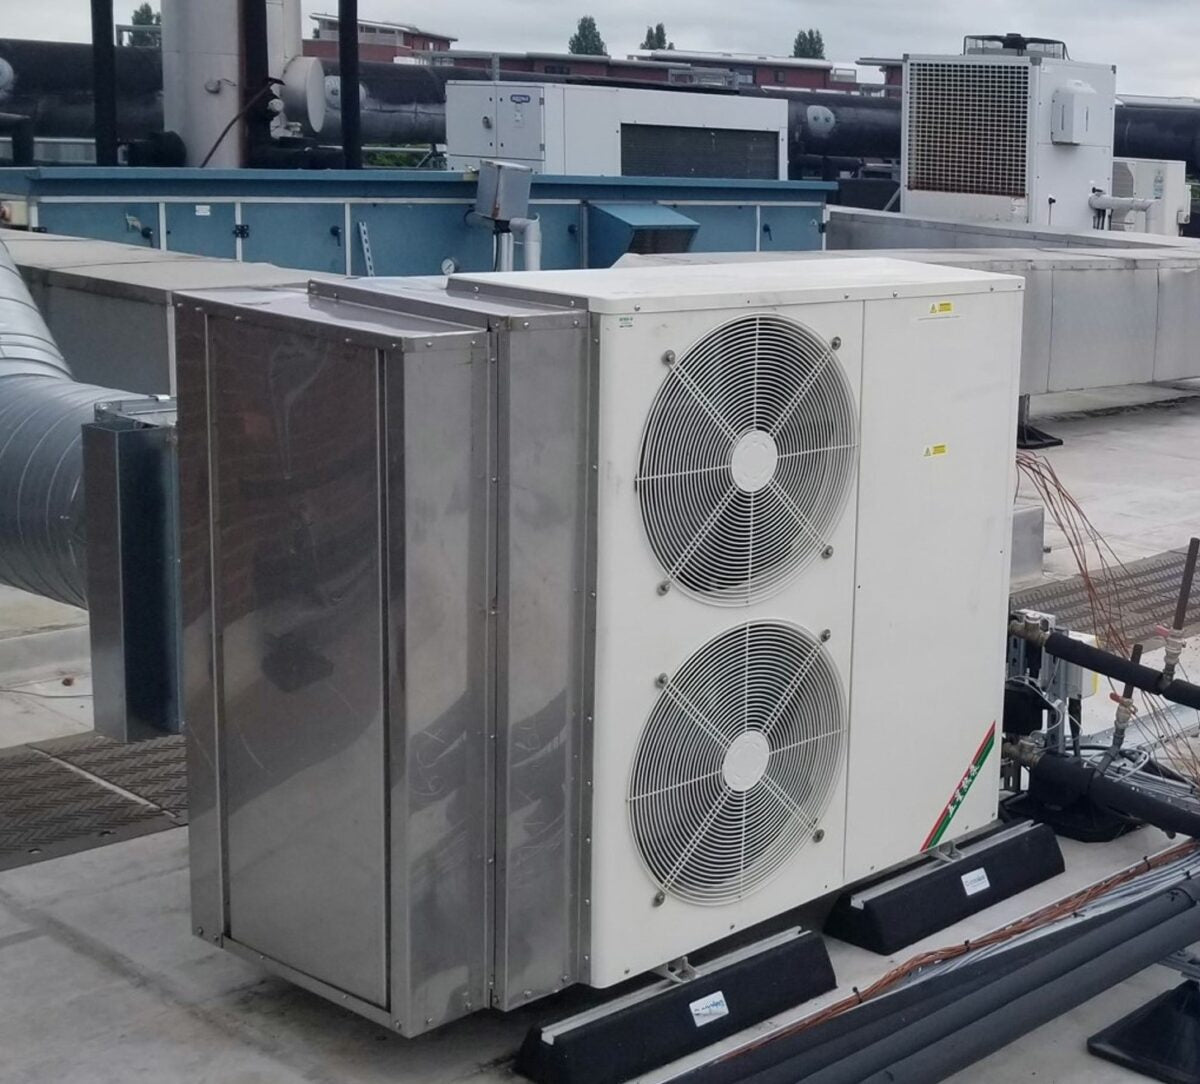 Dual source heat pump with high seasonal performance factors, near-zero defrosting costs